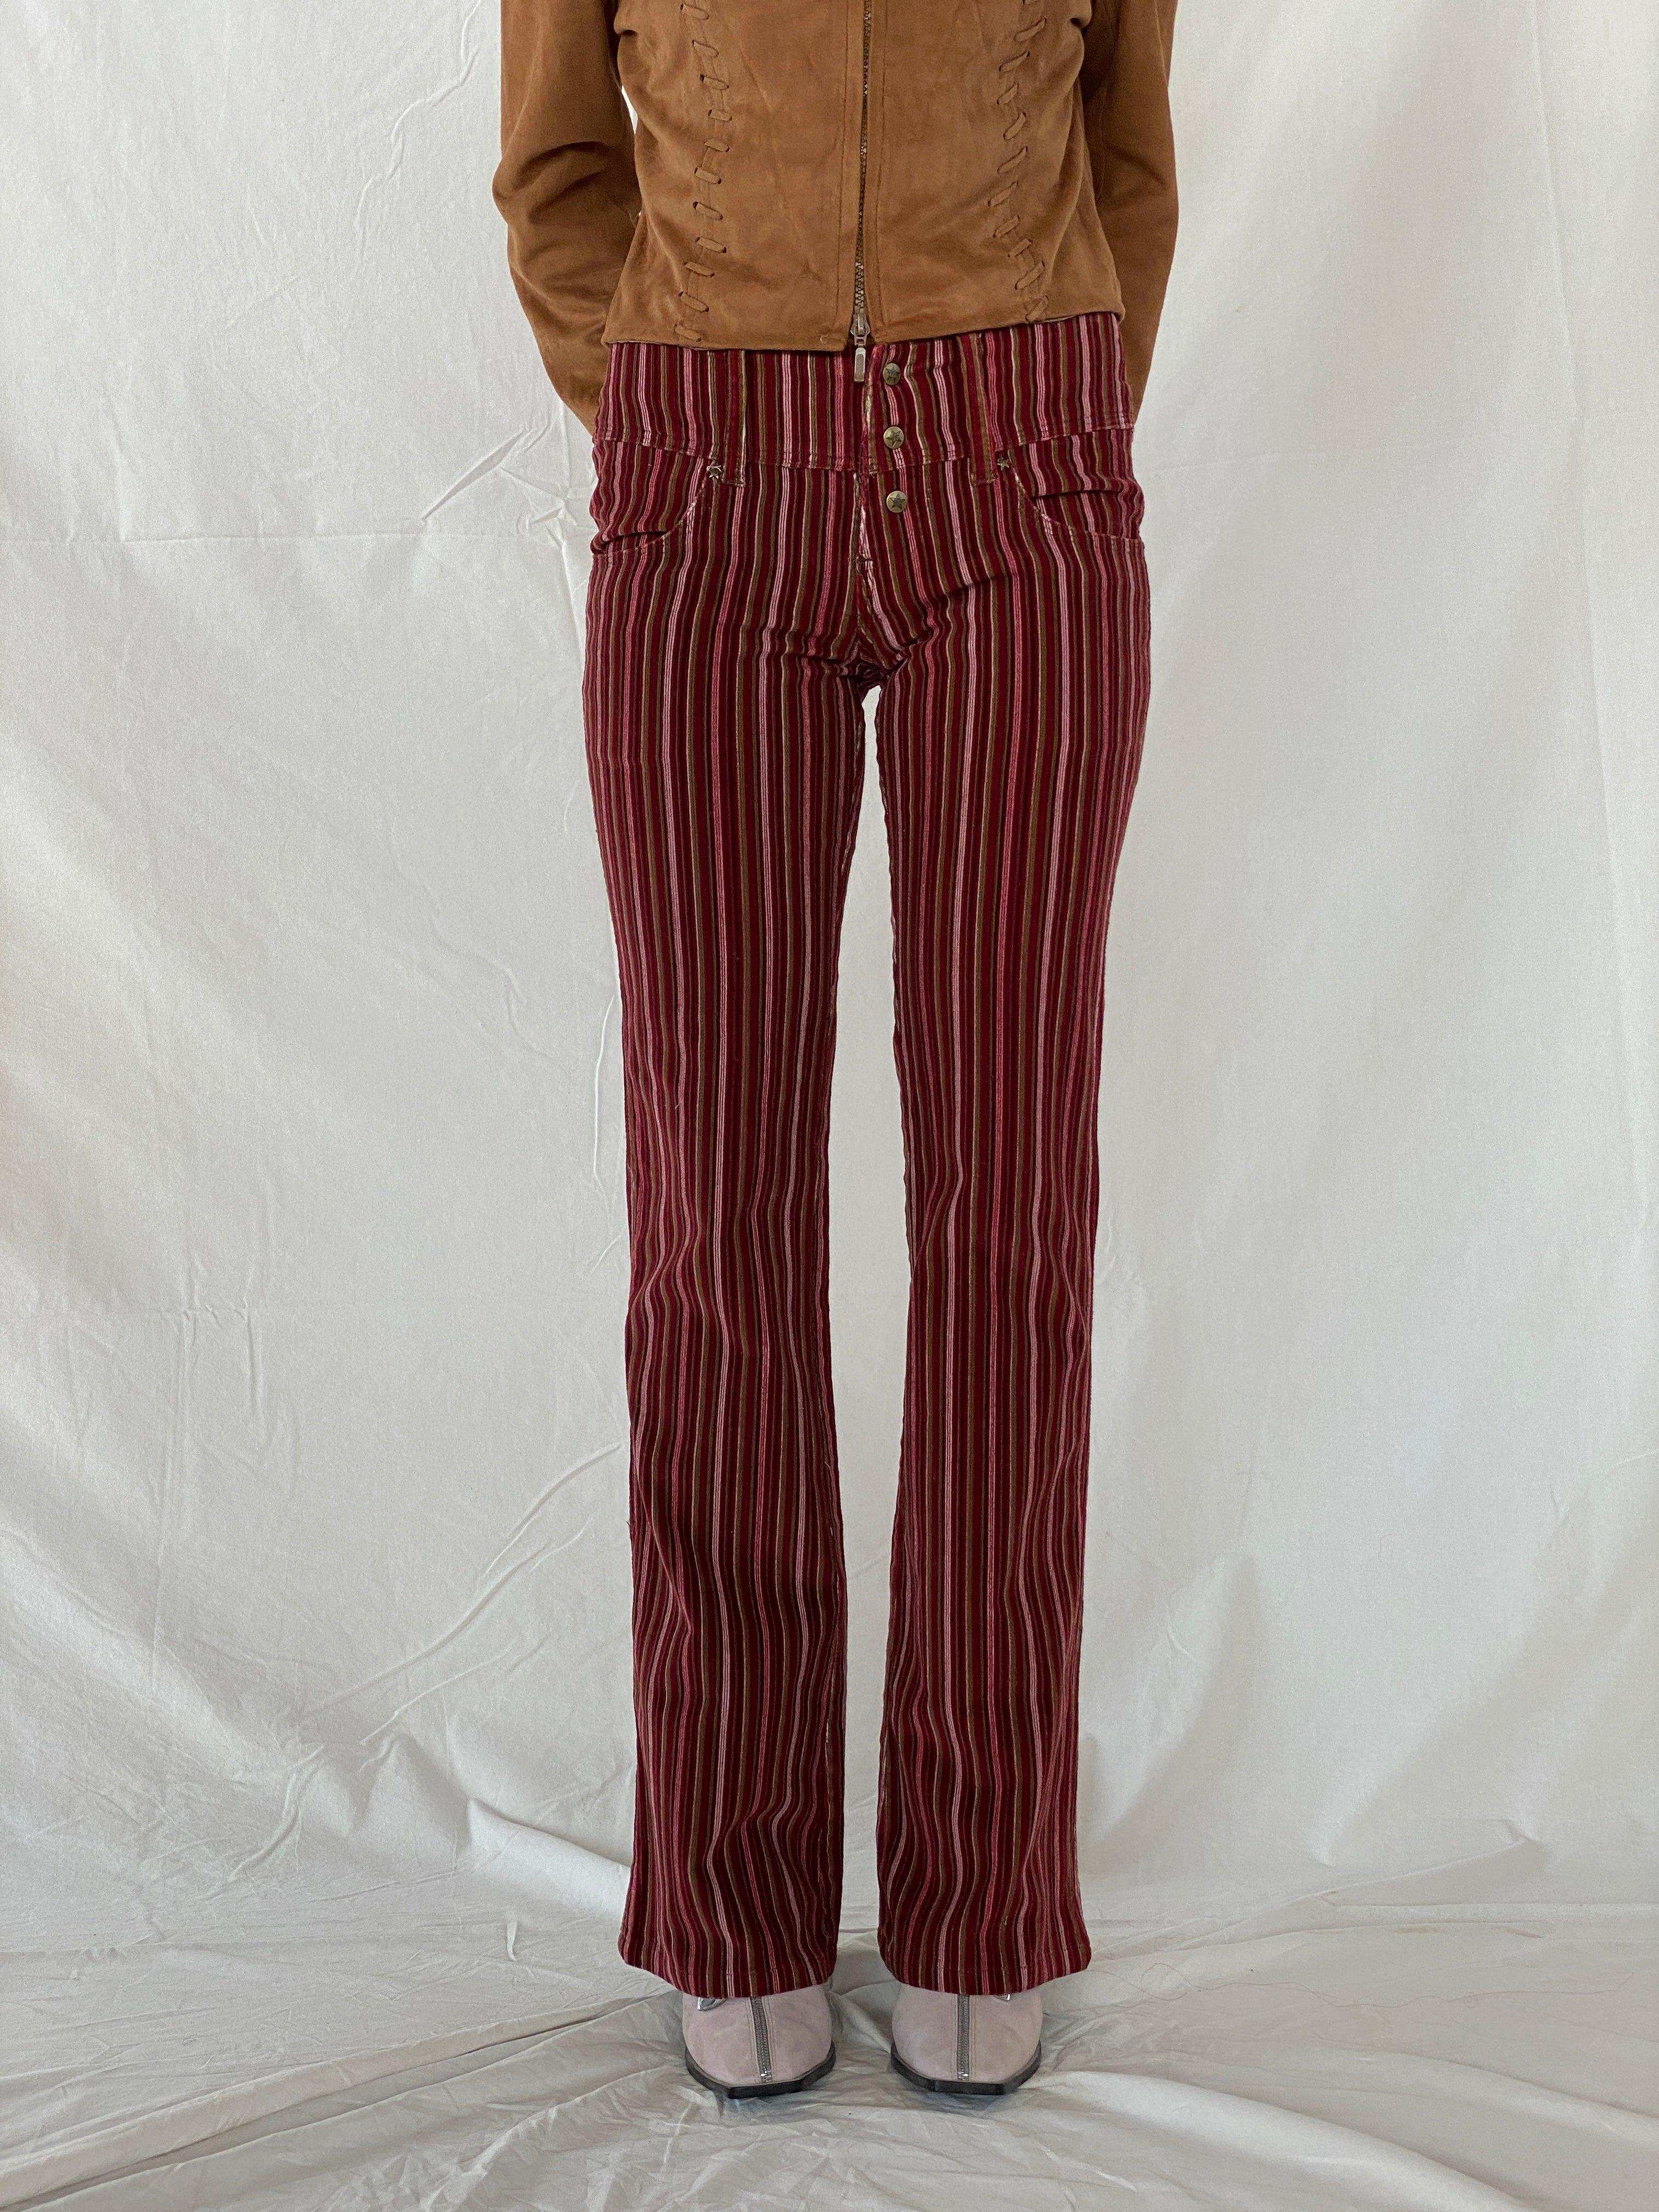 Vintage Bubblegum USA Striped Low Rise Corduroy Flare Pants - Balagan Vintage Corduroy Pants 00s, corduroy, corduroy pants, NEW IN, Tojan